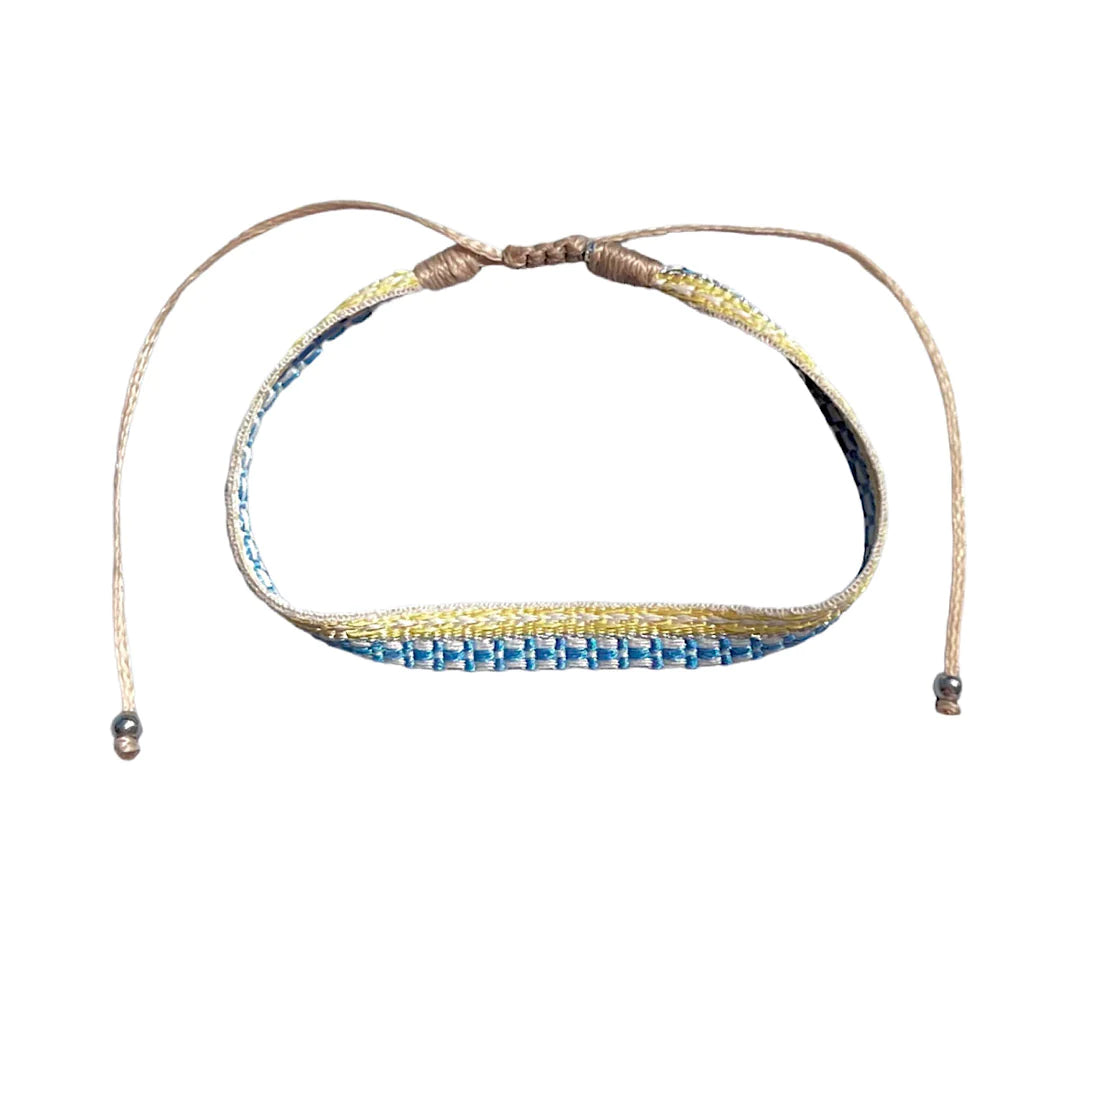 One fabric strand of a bracelet set. 